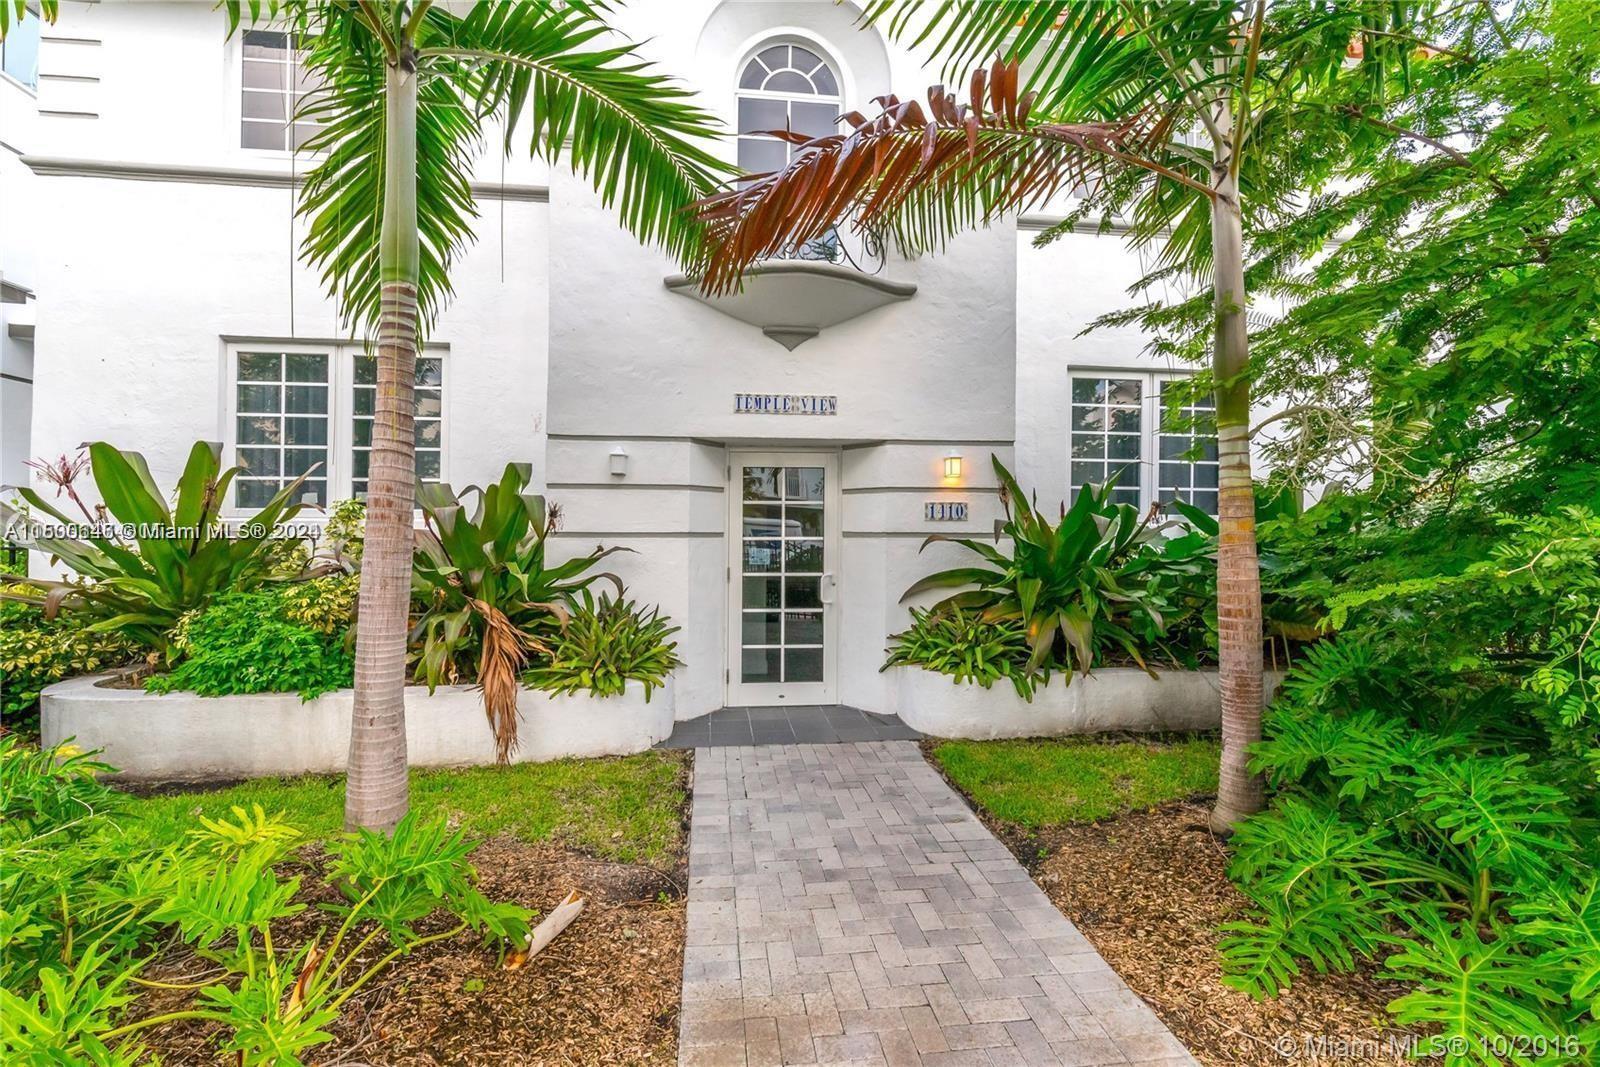 Property for Sale at 1410 Euclid Ave 3, Miami Beach, Miami-Dade County, Florida - Bedrooms: 2 
Bathrooms: 2  - $449,000